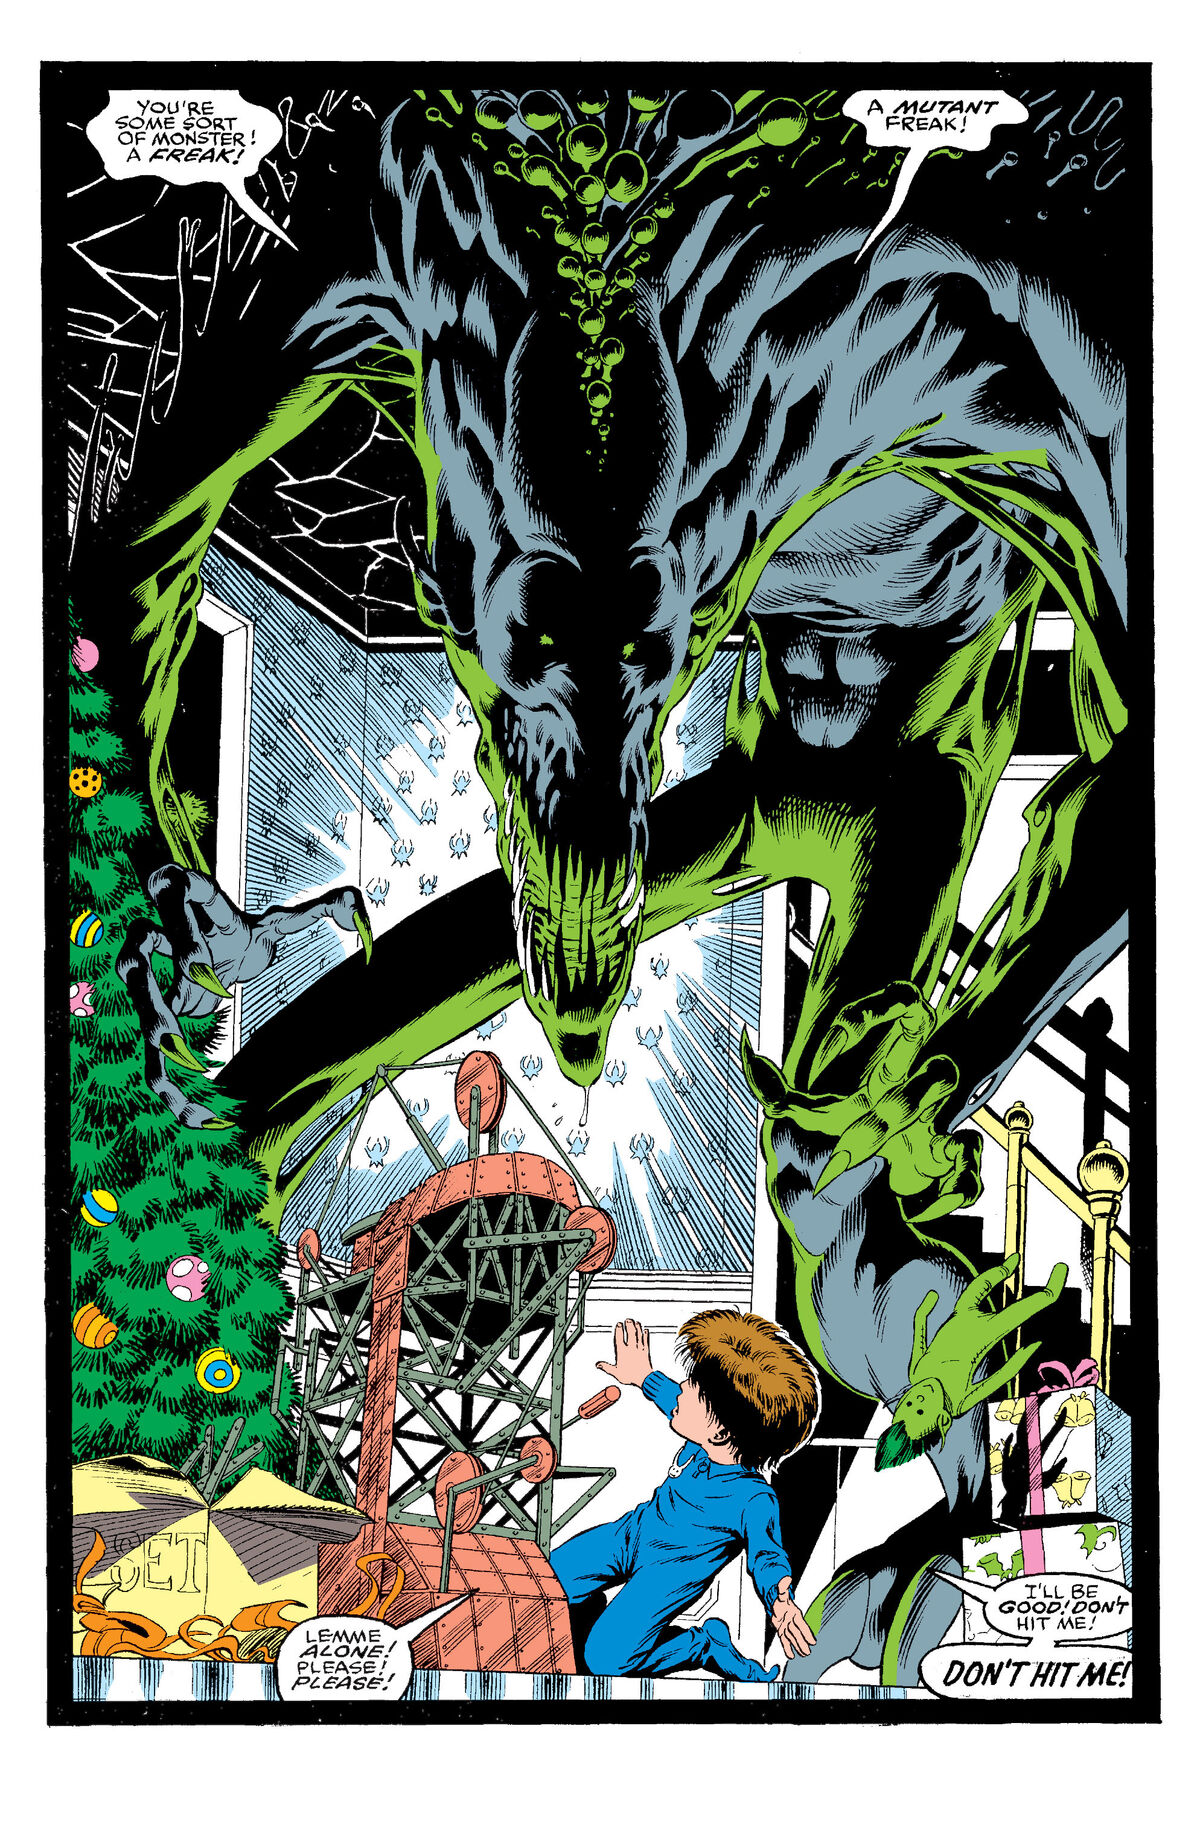 SPIDER-MAN #1 INHYUK LEE 616 Trade Dress Variant Amazing Fantasy #15 H –  The 616 Comics